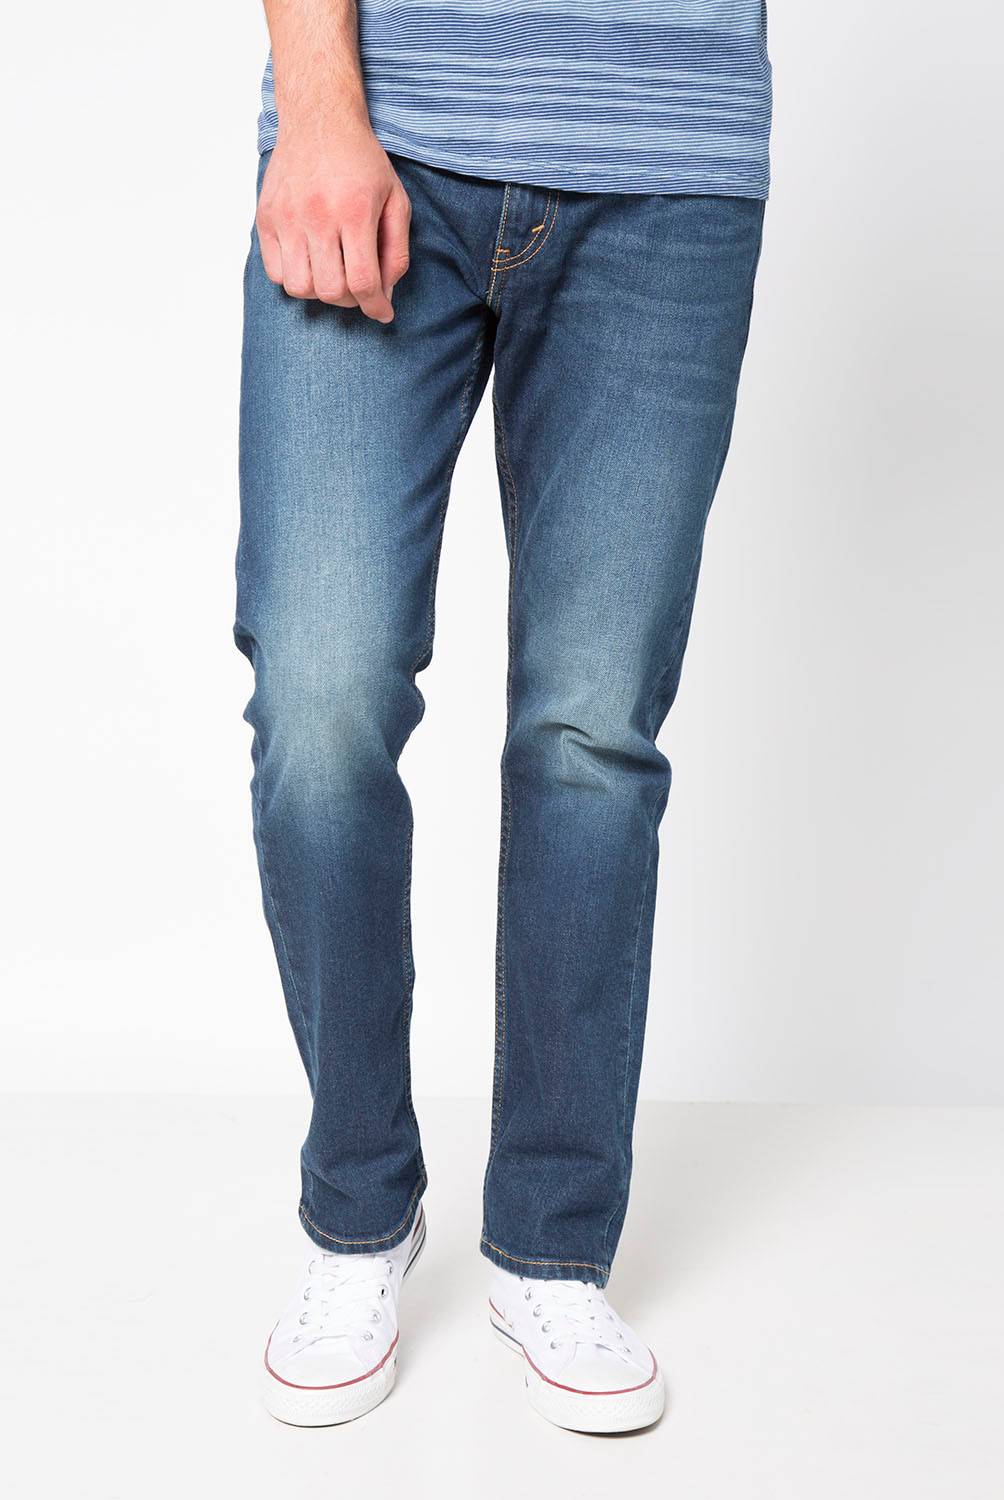 Levis - Jeans Regular